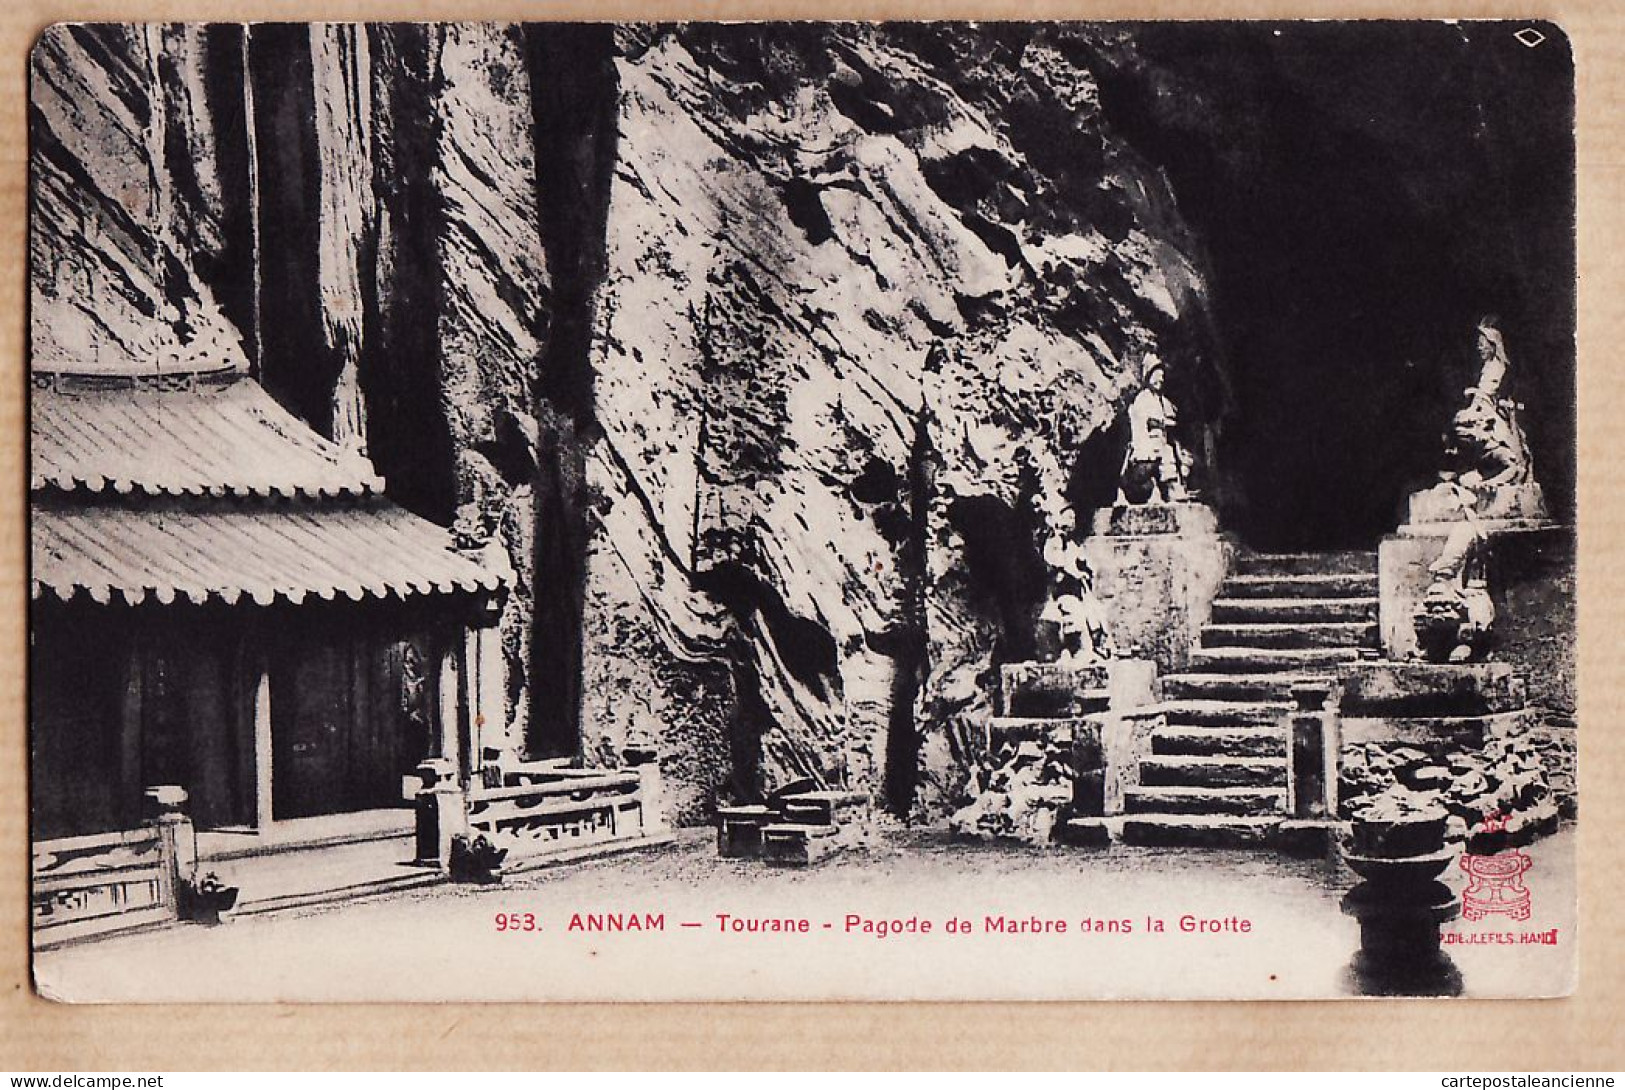 01026 ● 15.06.1937 Teinture Boldo Foie Indochine Viet-Nam Tonkin ANNAM TOURANE Pagode Marbre Dans Grotte DIEULEFILS HAND - Viêt-Nam